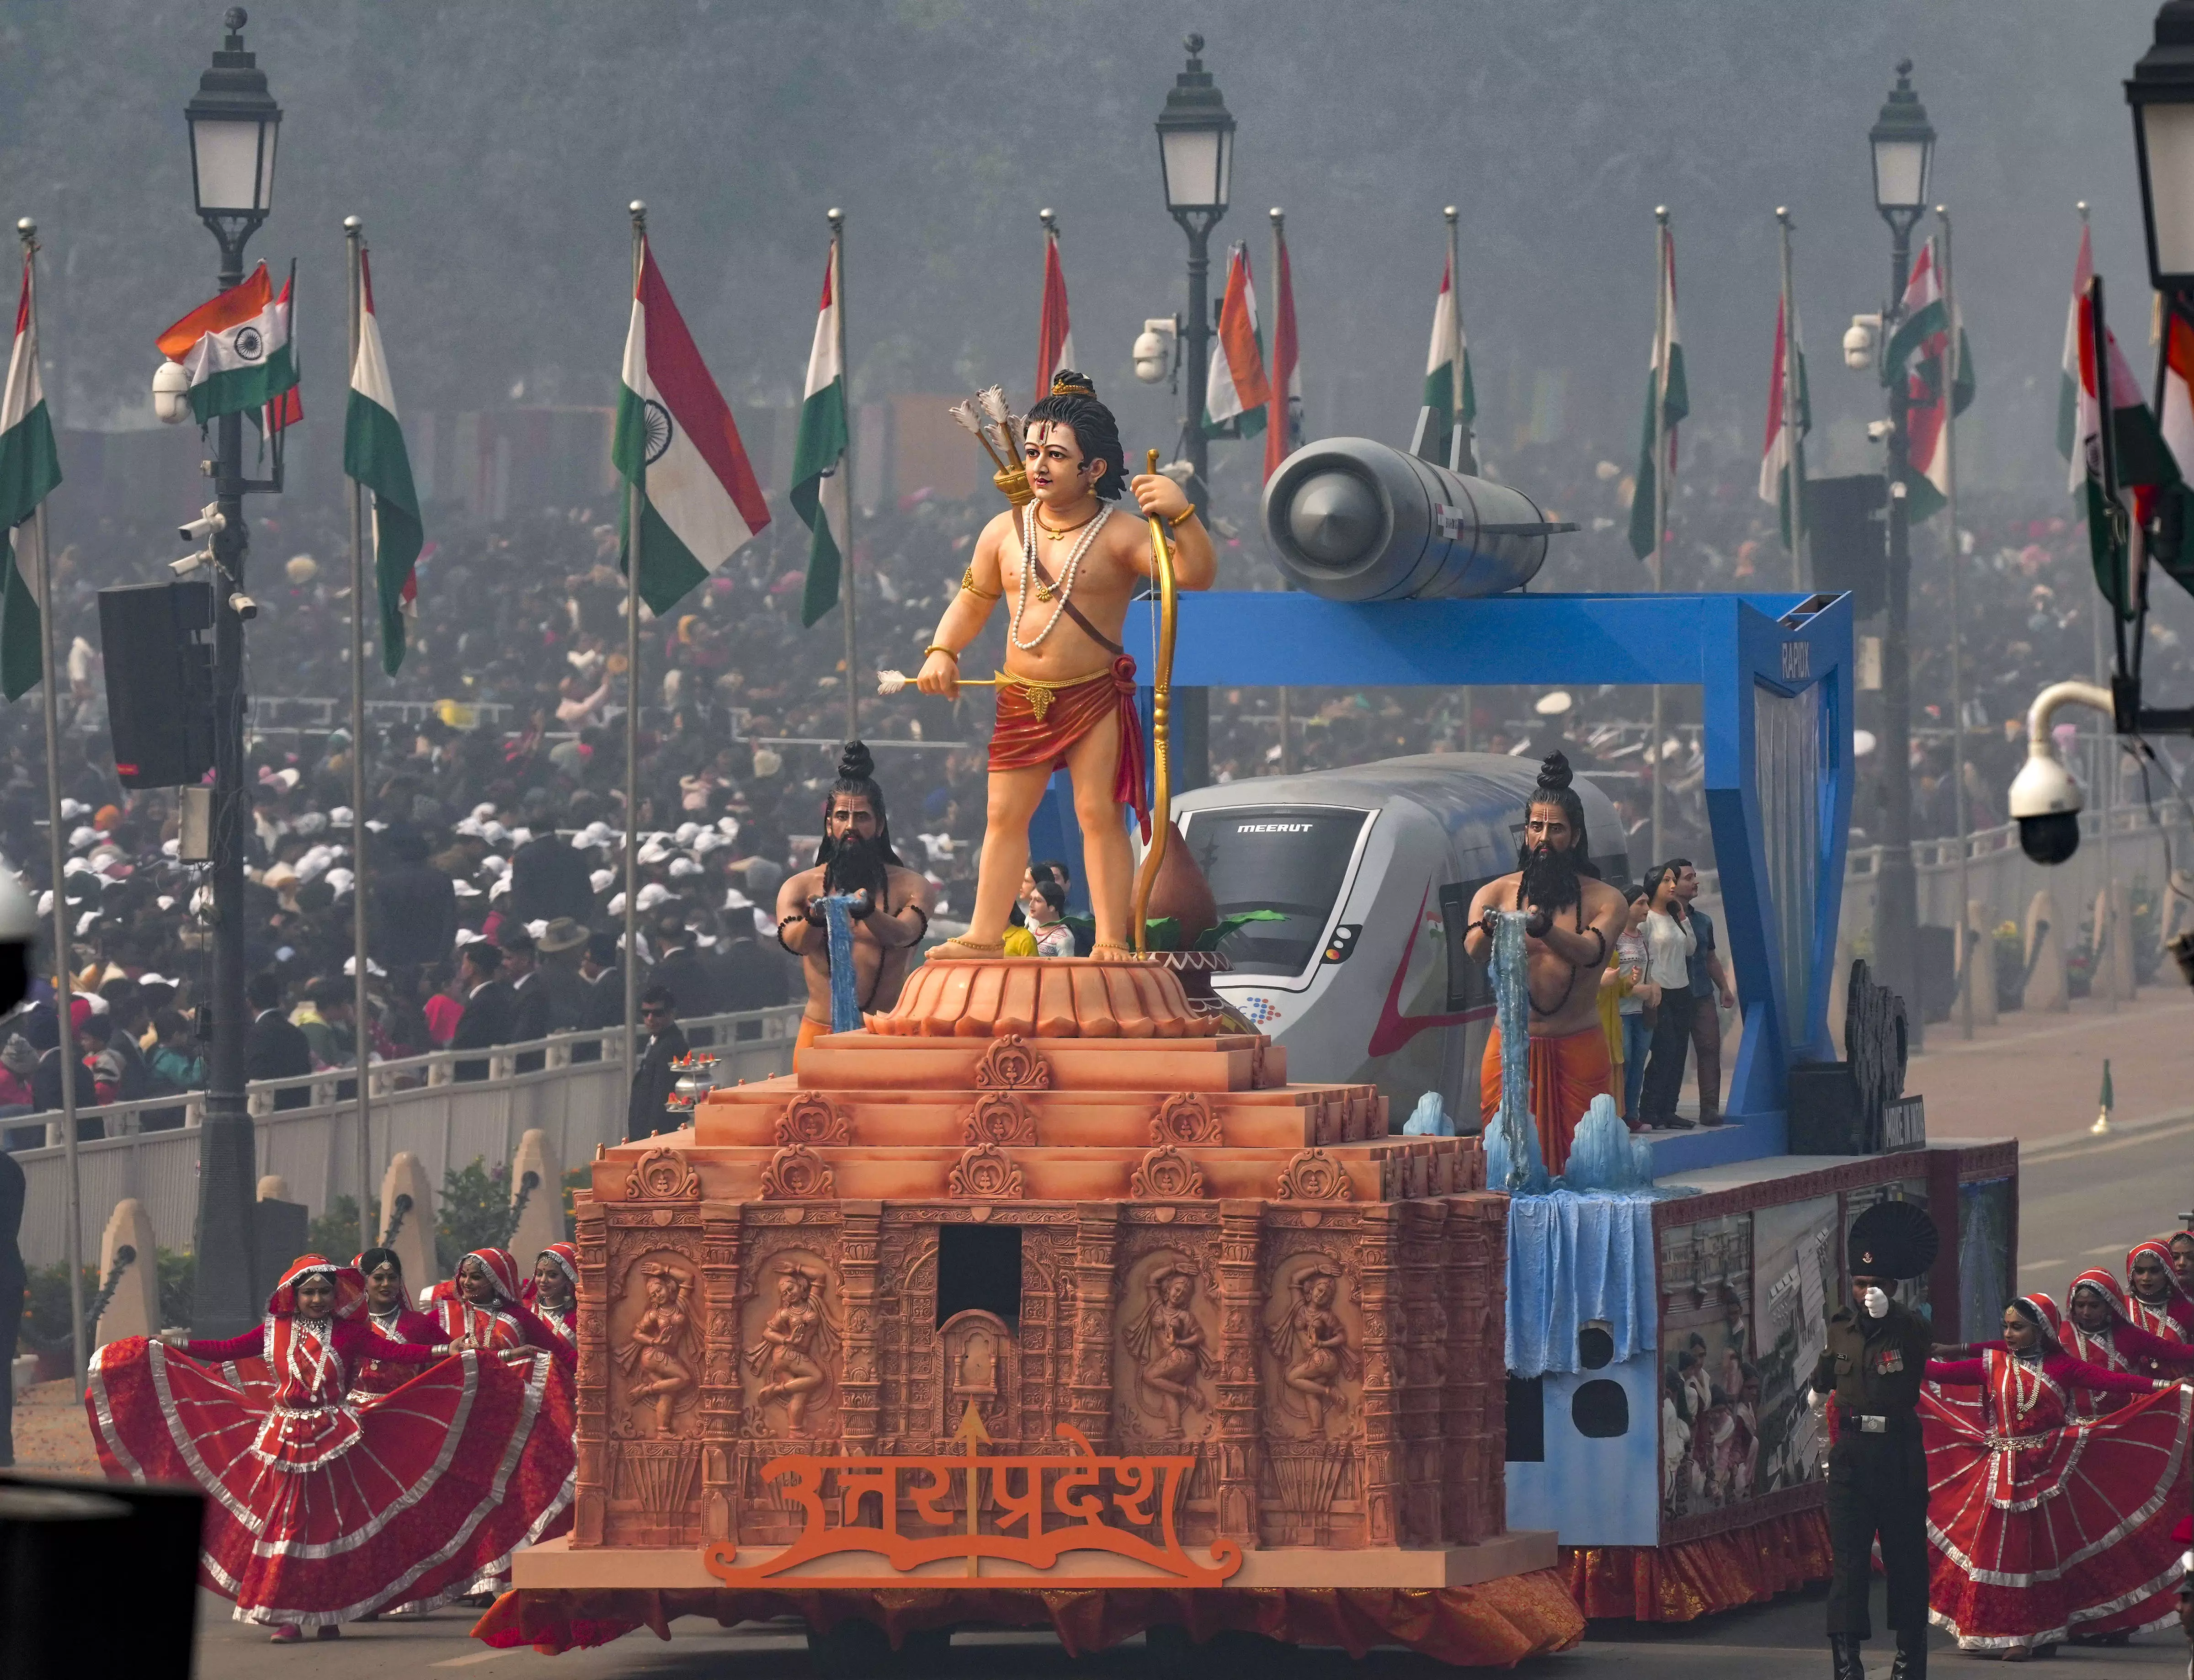 Uttar Pradesh tableau showcases Ram temple consecration on Republic Day